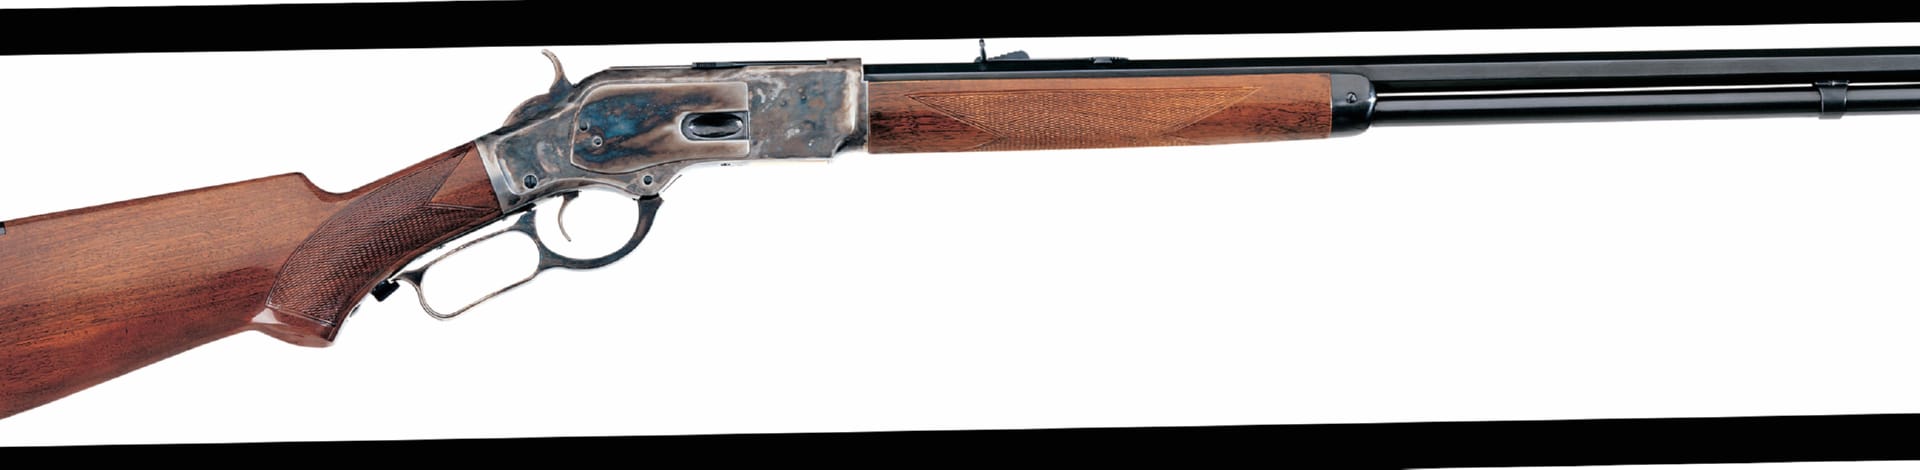 Uberti 1873 Rifle wallpapers HD quality